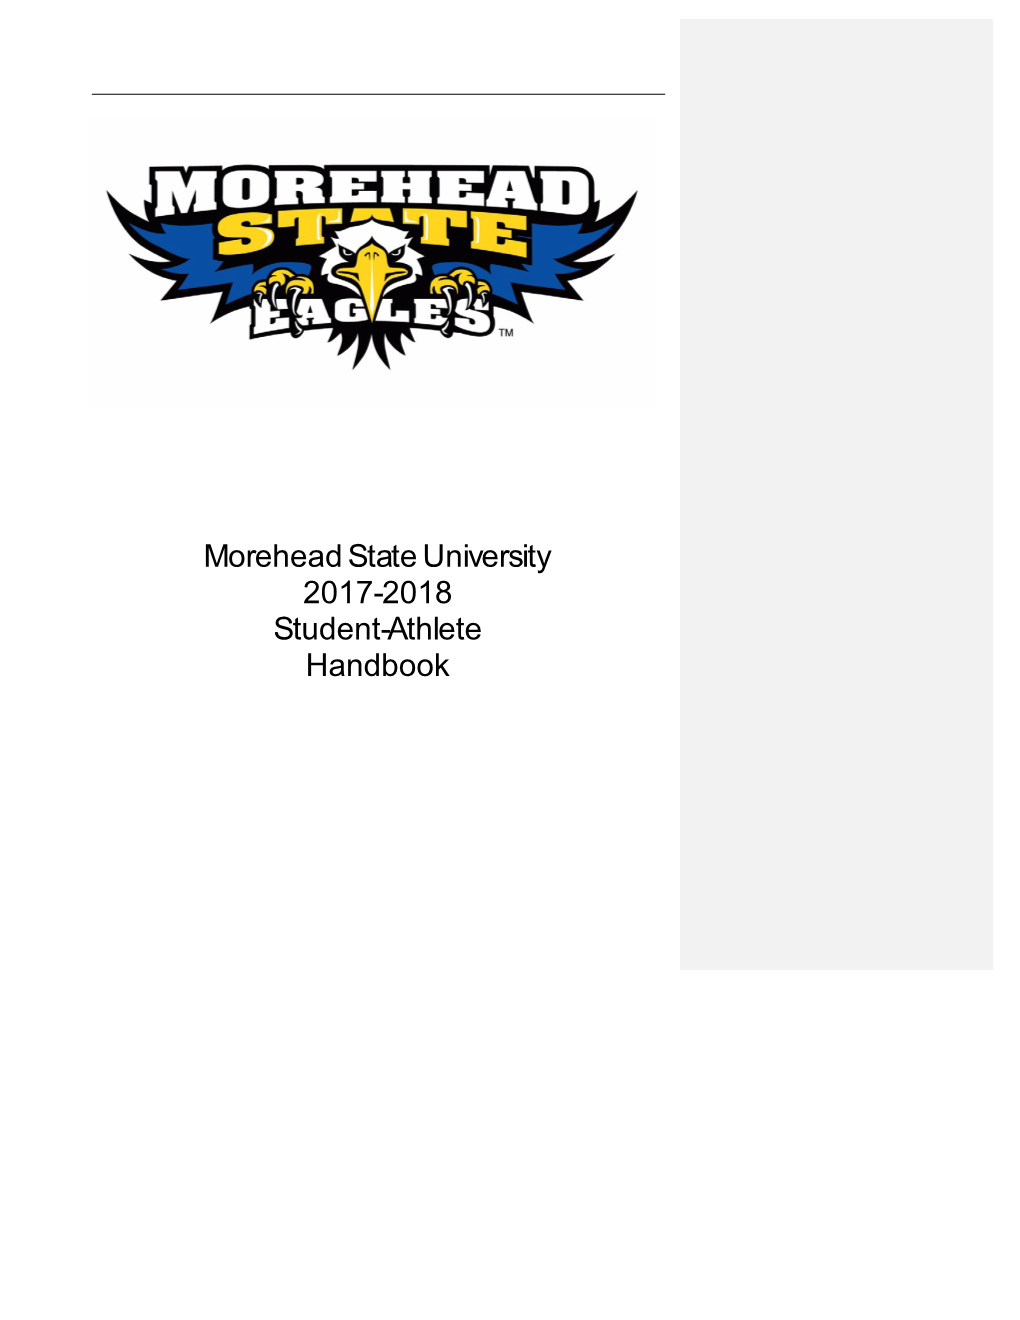 Morehead State University 2017-2018 Student-Athlete Handbook Contents 1 - Intercollegiate Athletics